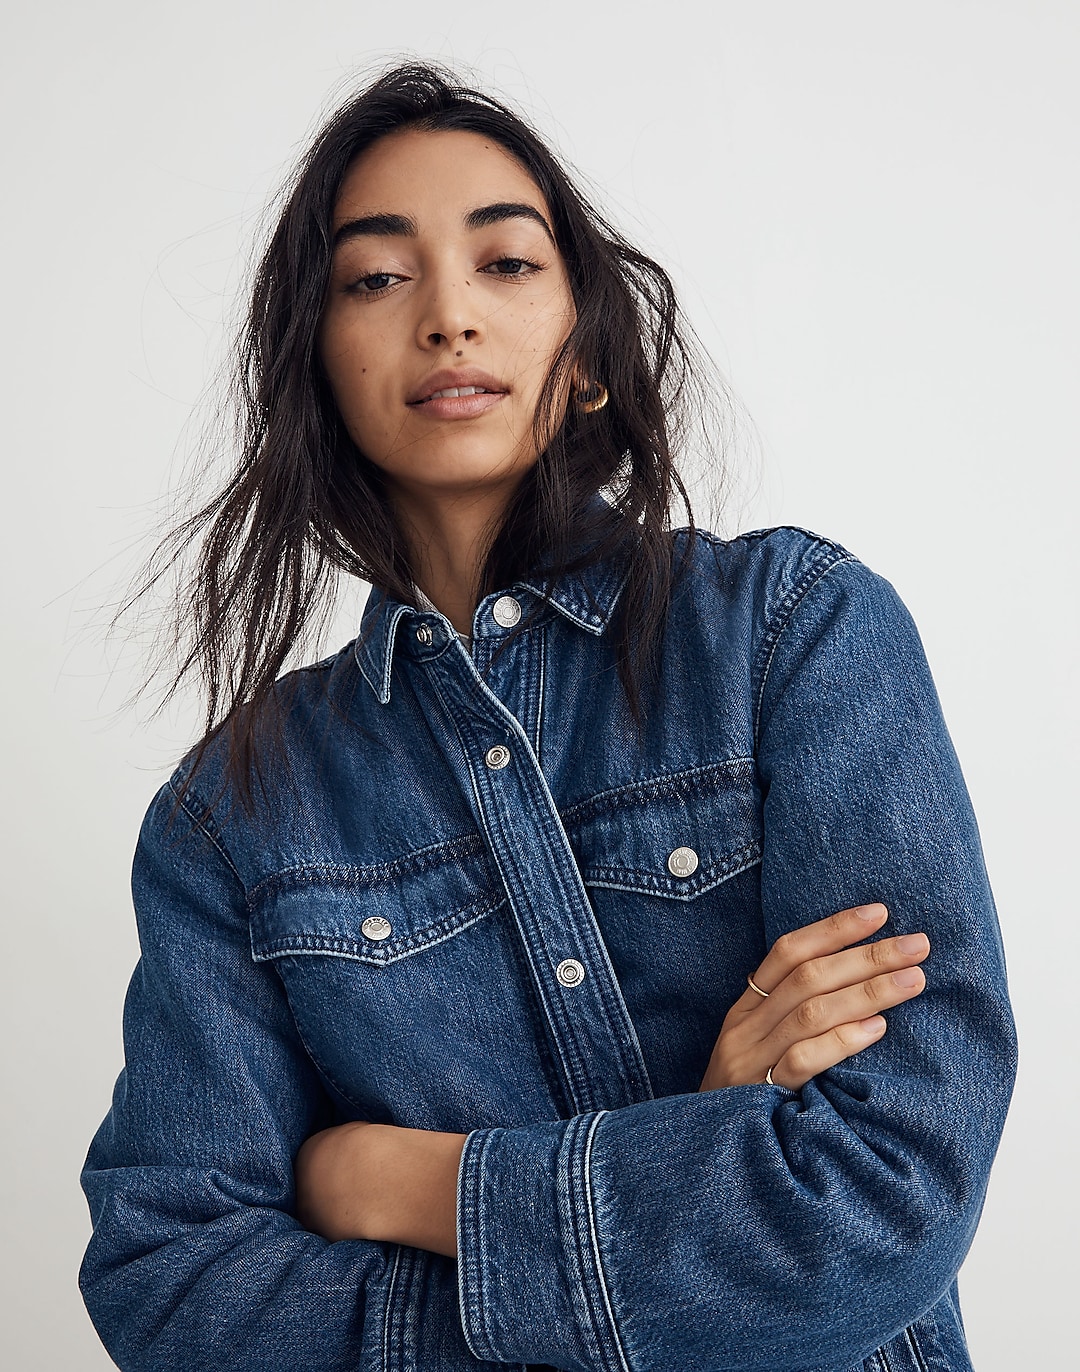 Emma Chamberlain: Denim Jacket and Jeans